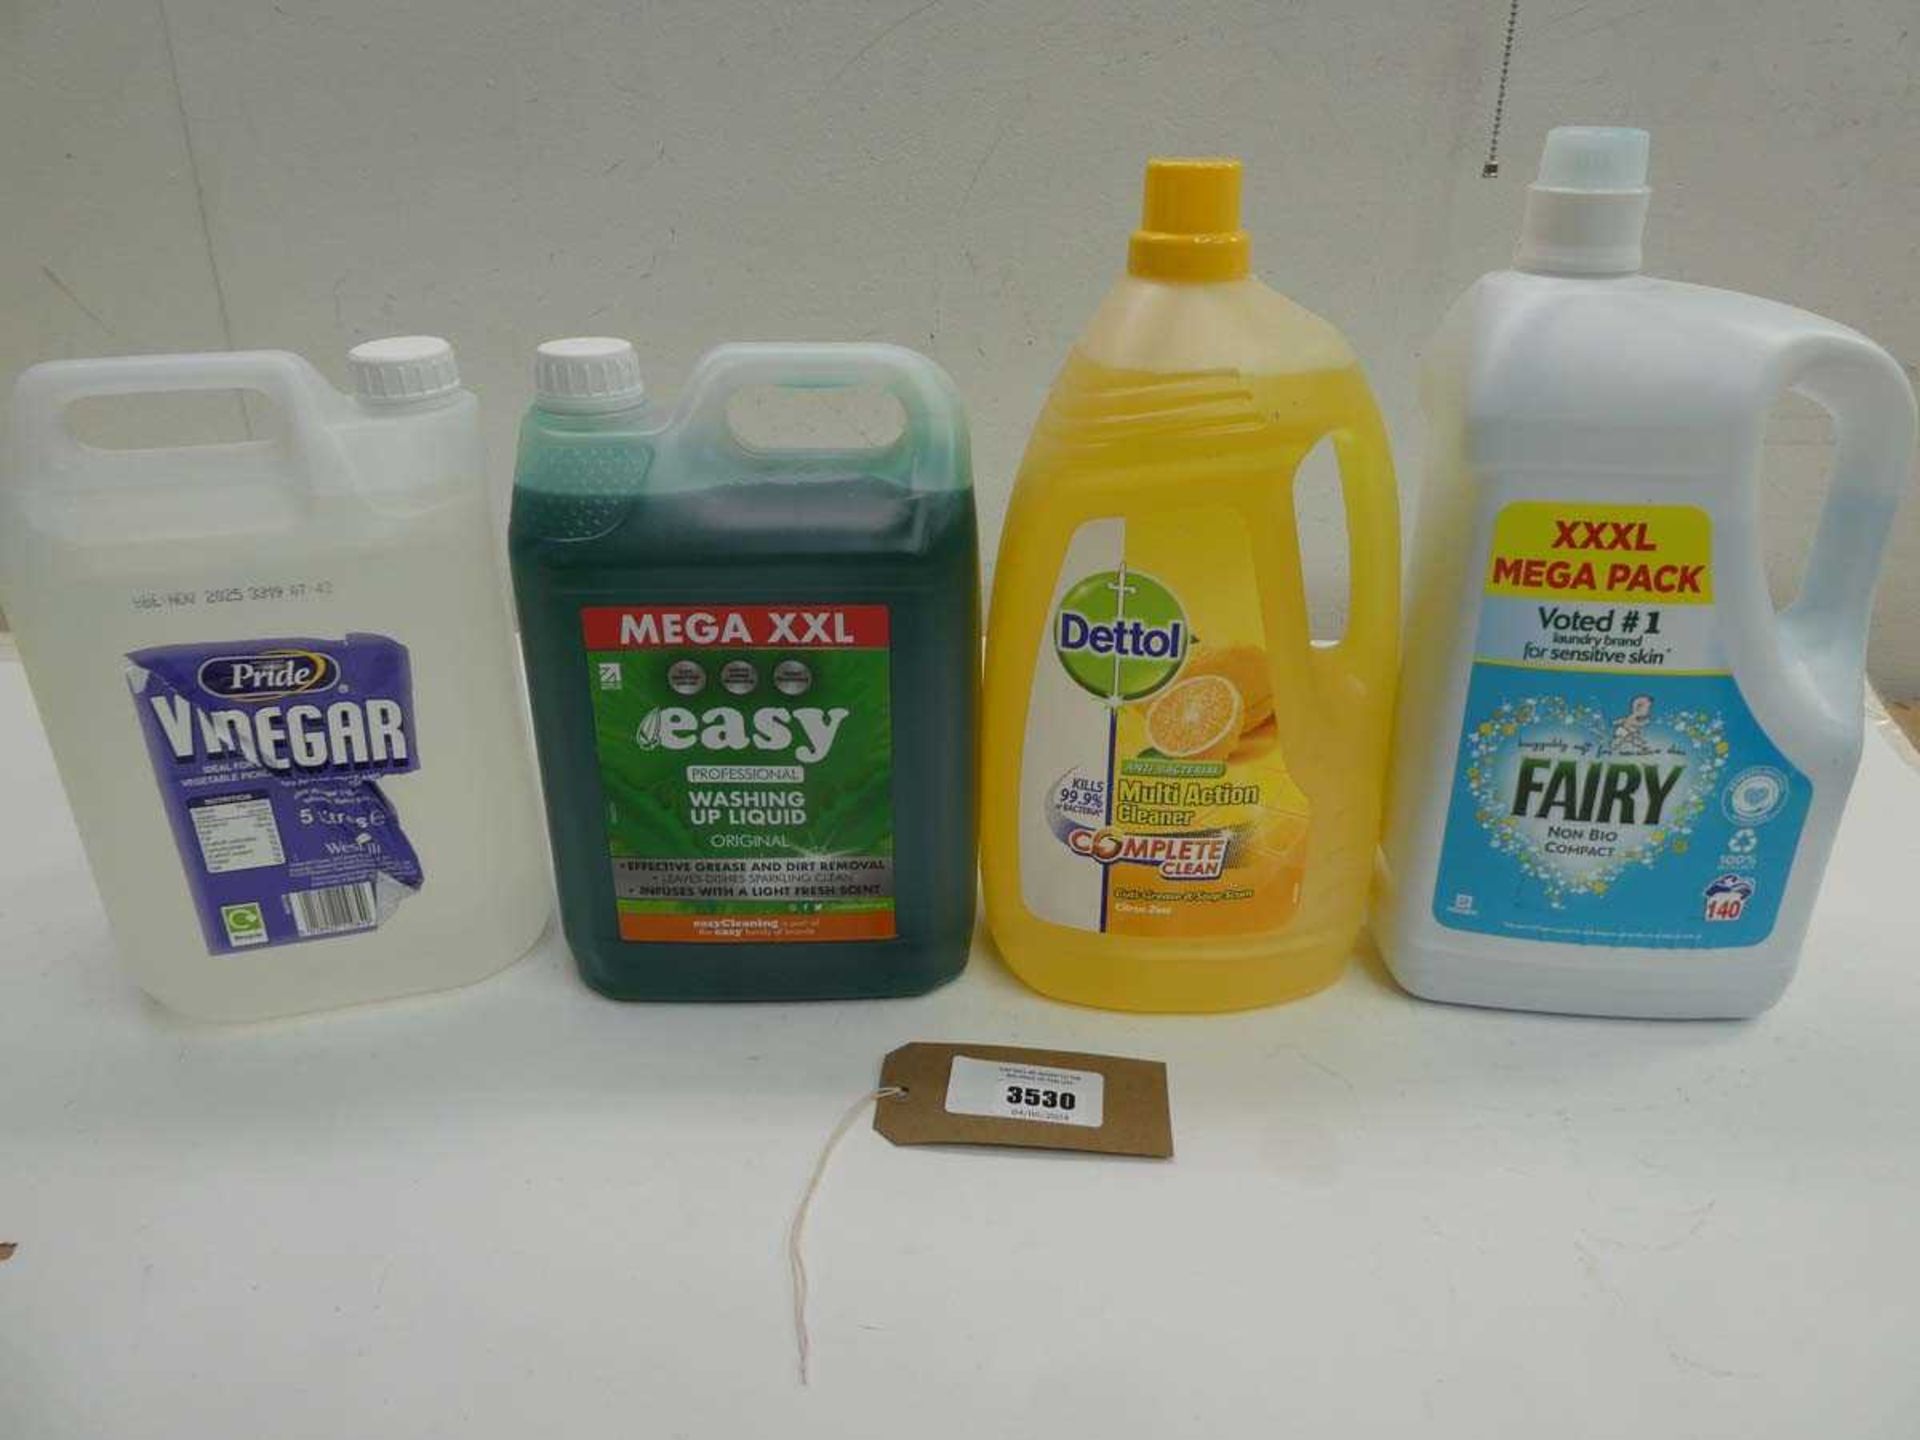 +VAT Pickling Vinegar, Washing Up Liquid, Dettol Multi Purpose Cleaner and Fairy Non Bio compact